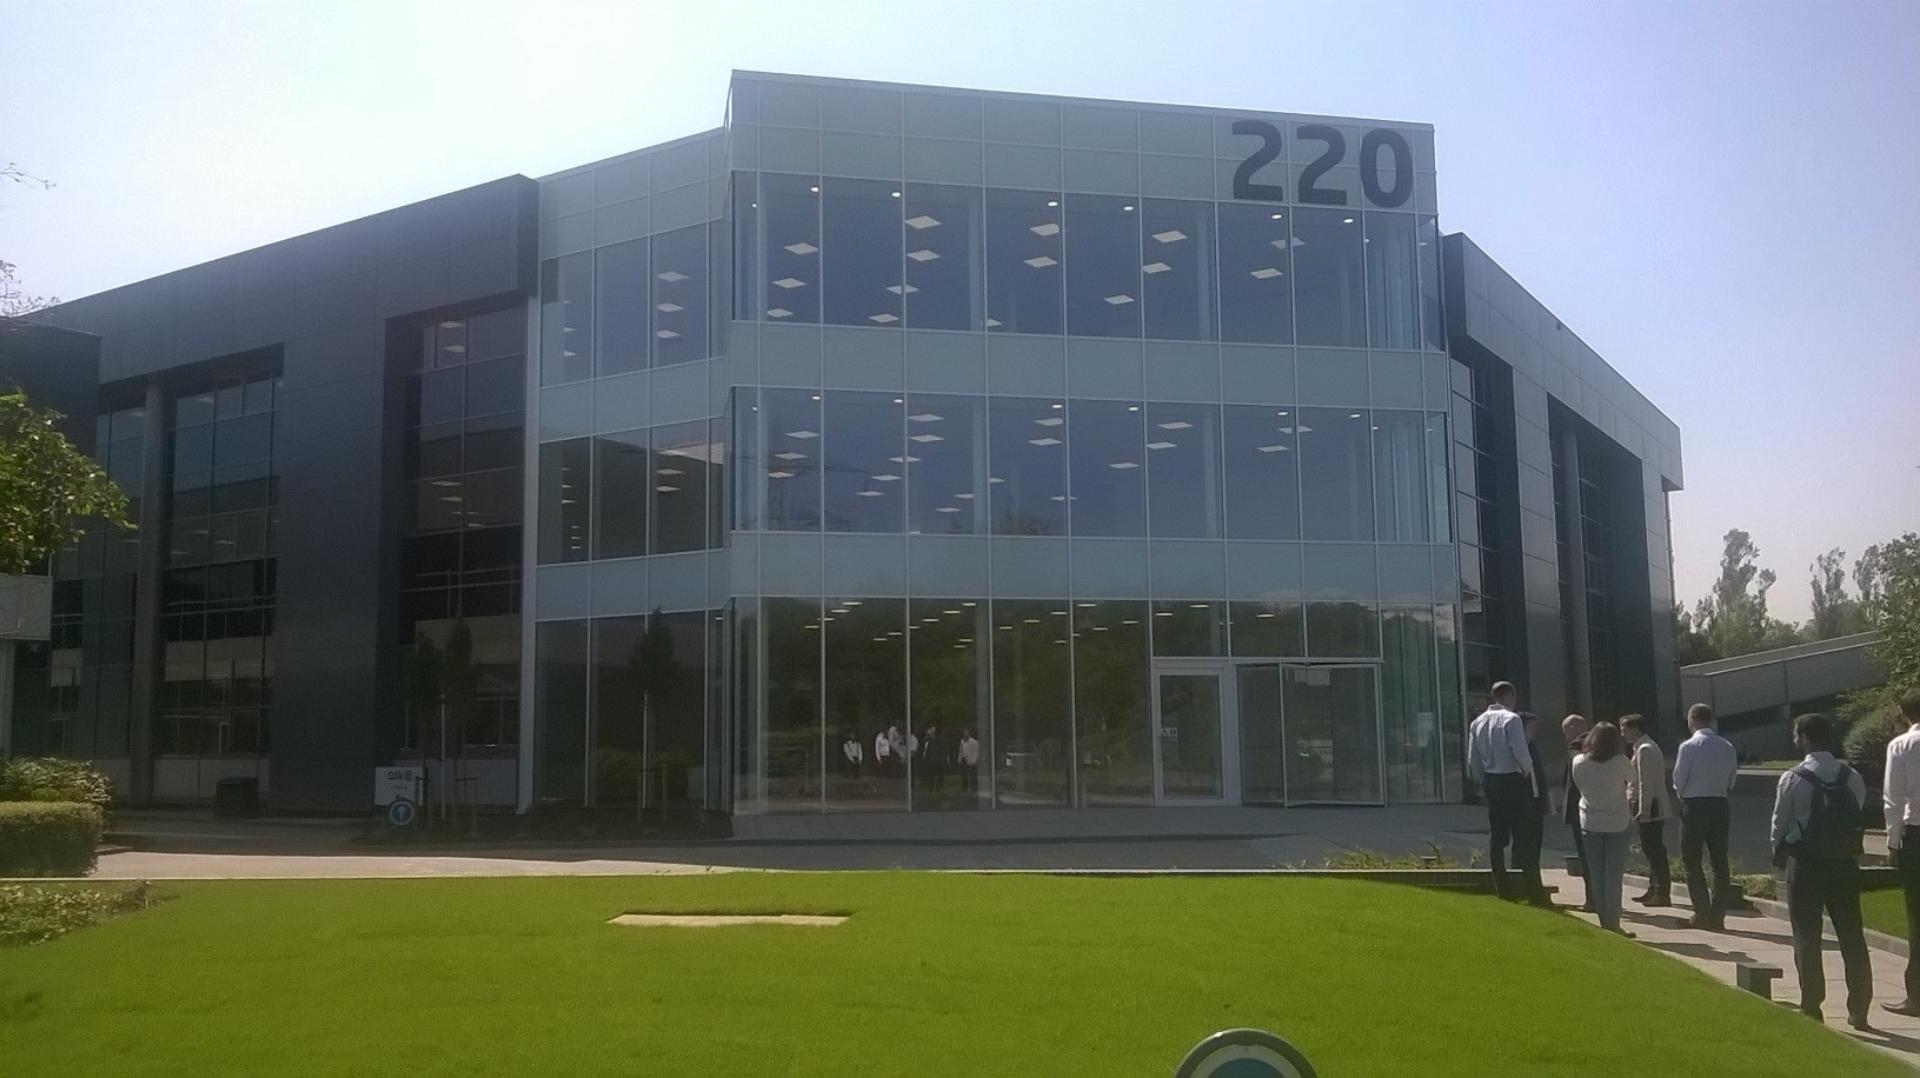 220 Winnersh Building